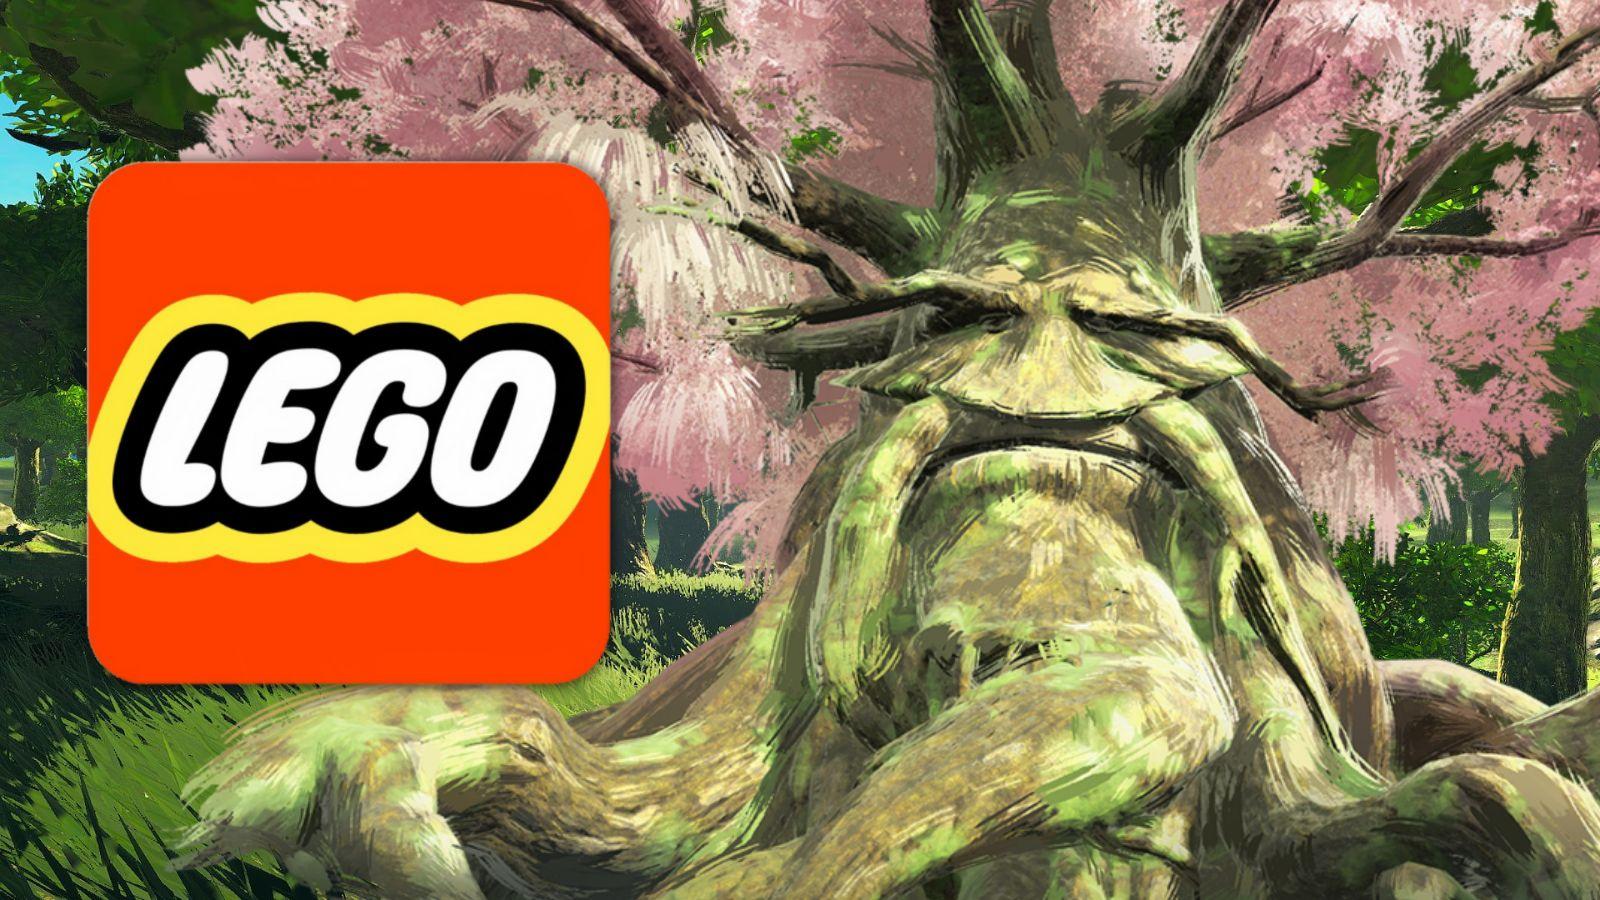 Rumors suggest Legend of Zelda Great Deku Tree LEGO set releasing